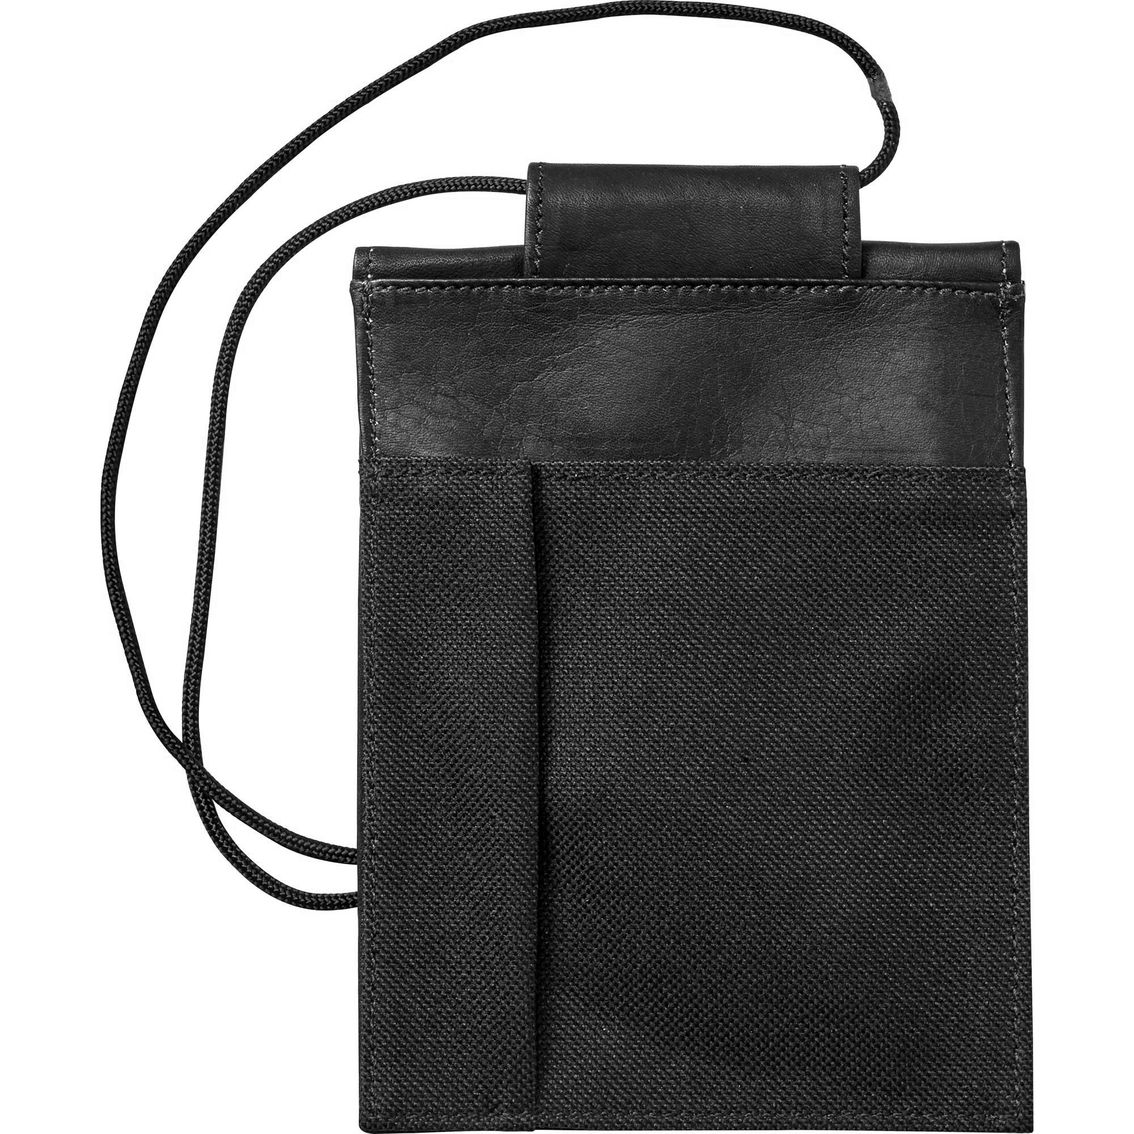 Piel Leather Hanging Passport Holder - Image 2 of 2